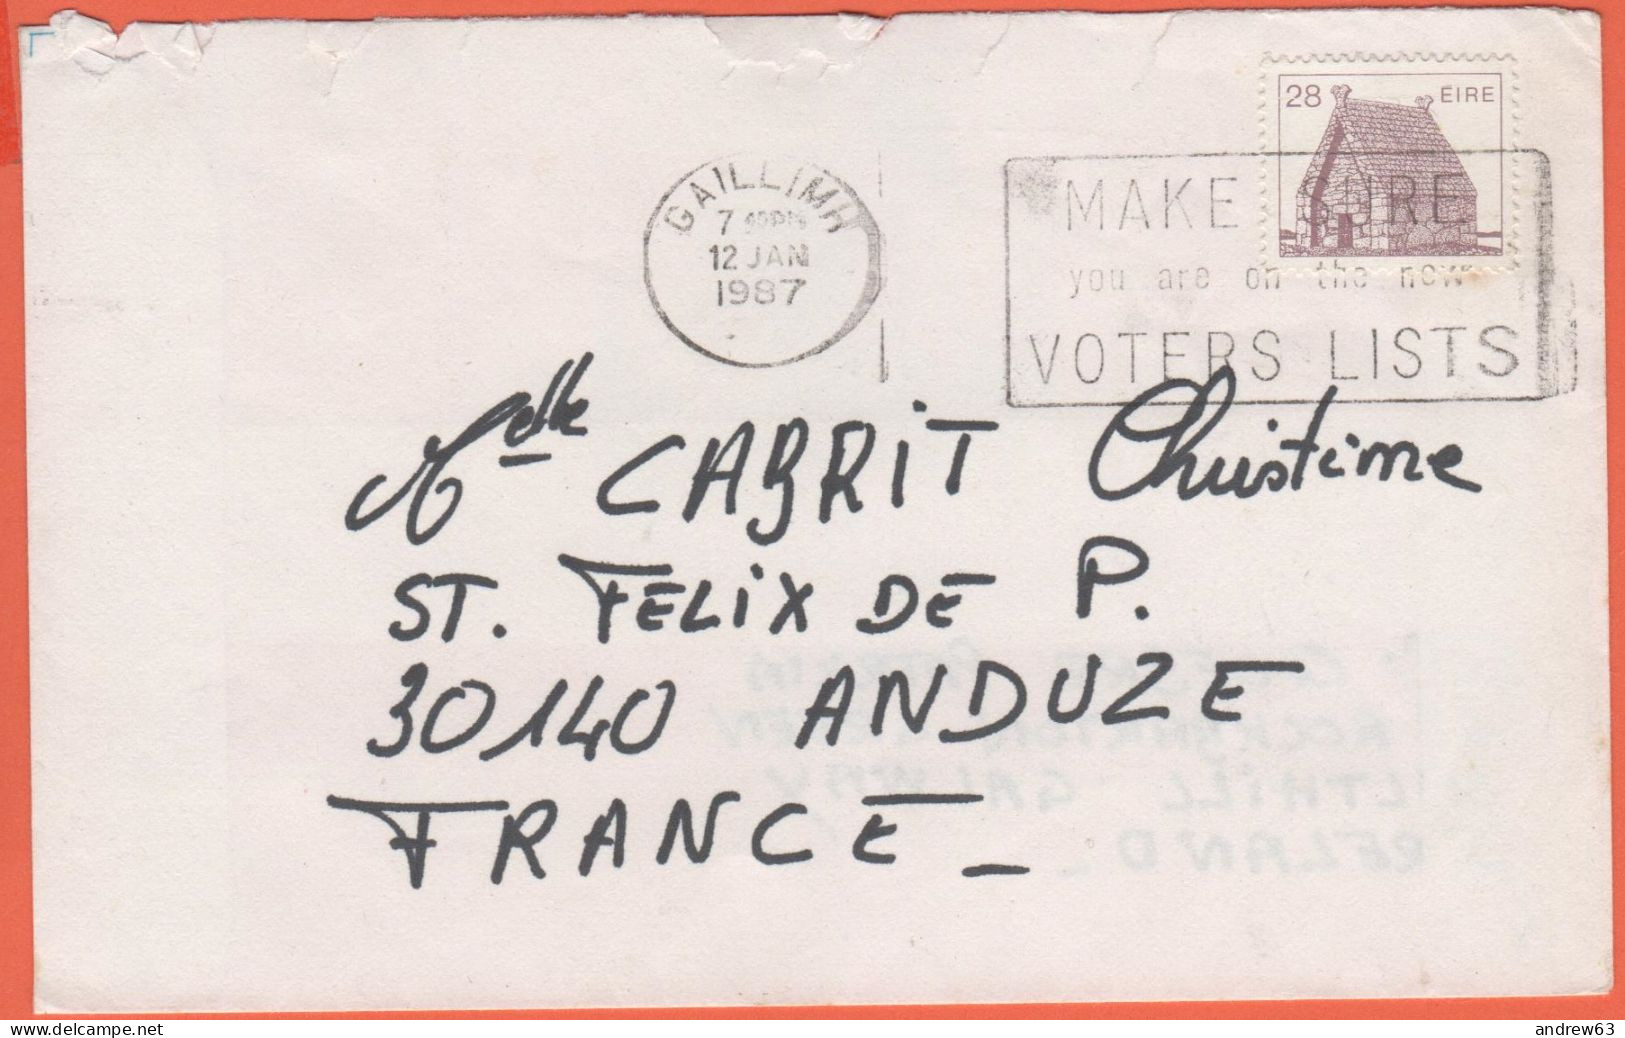 IRLANDA - IRELAND - Irlande - EIRE - 1987 - 28 - Viaggiata Da Gaillimh Per Anduze, France - Briefe U. Dokumente